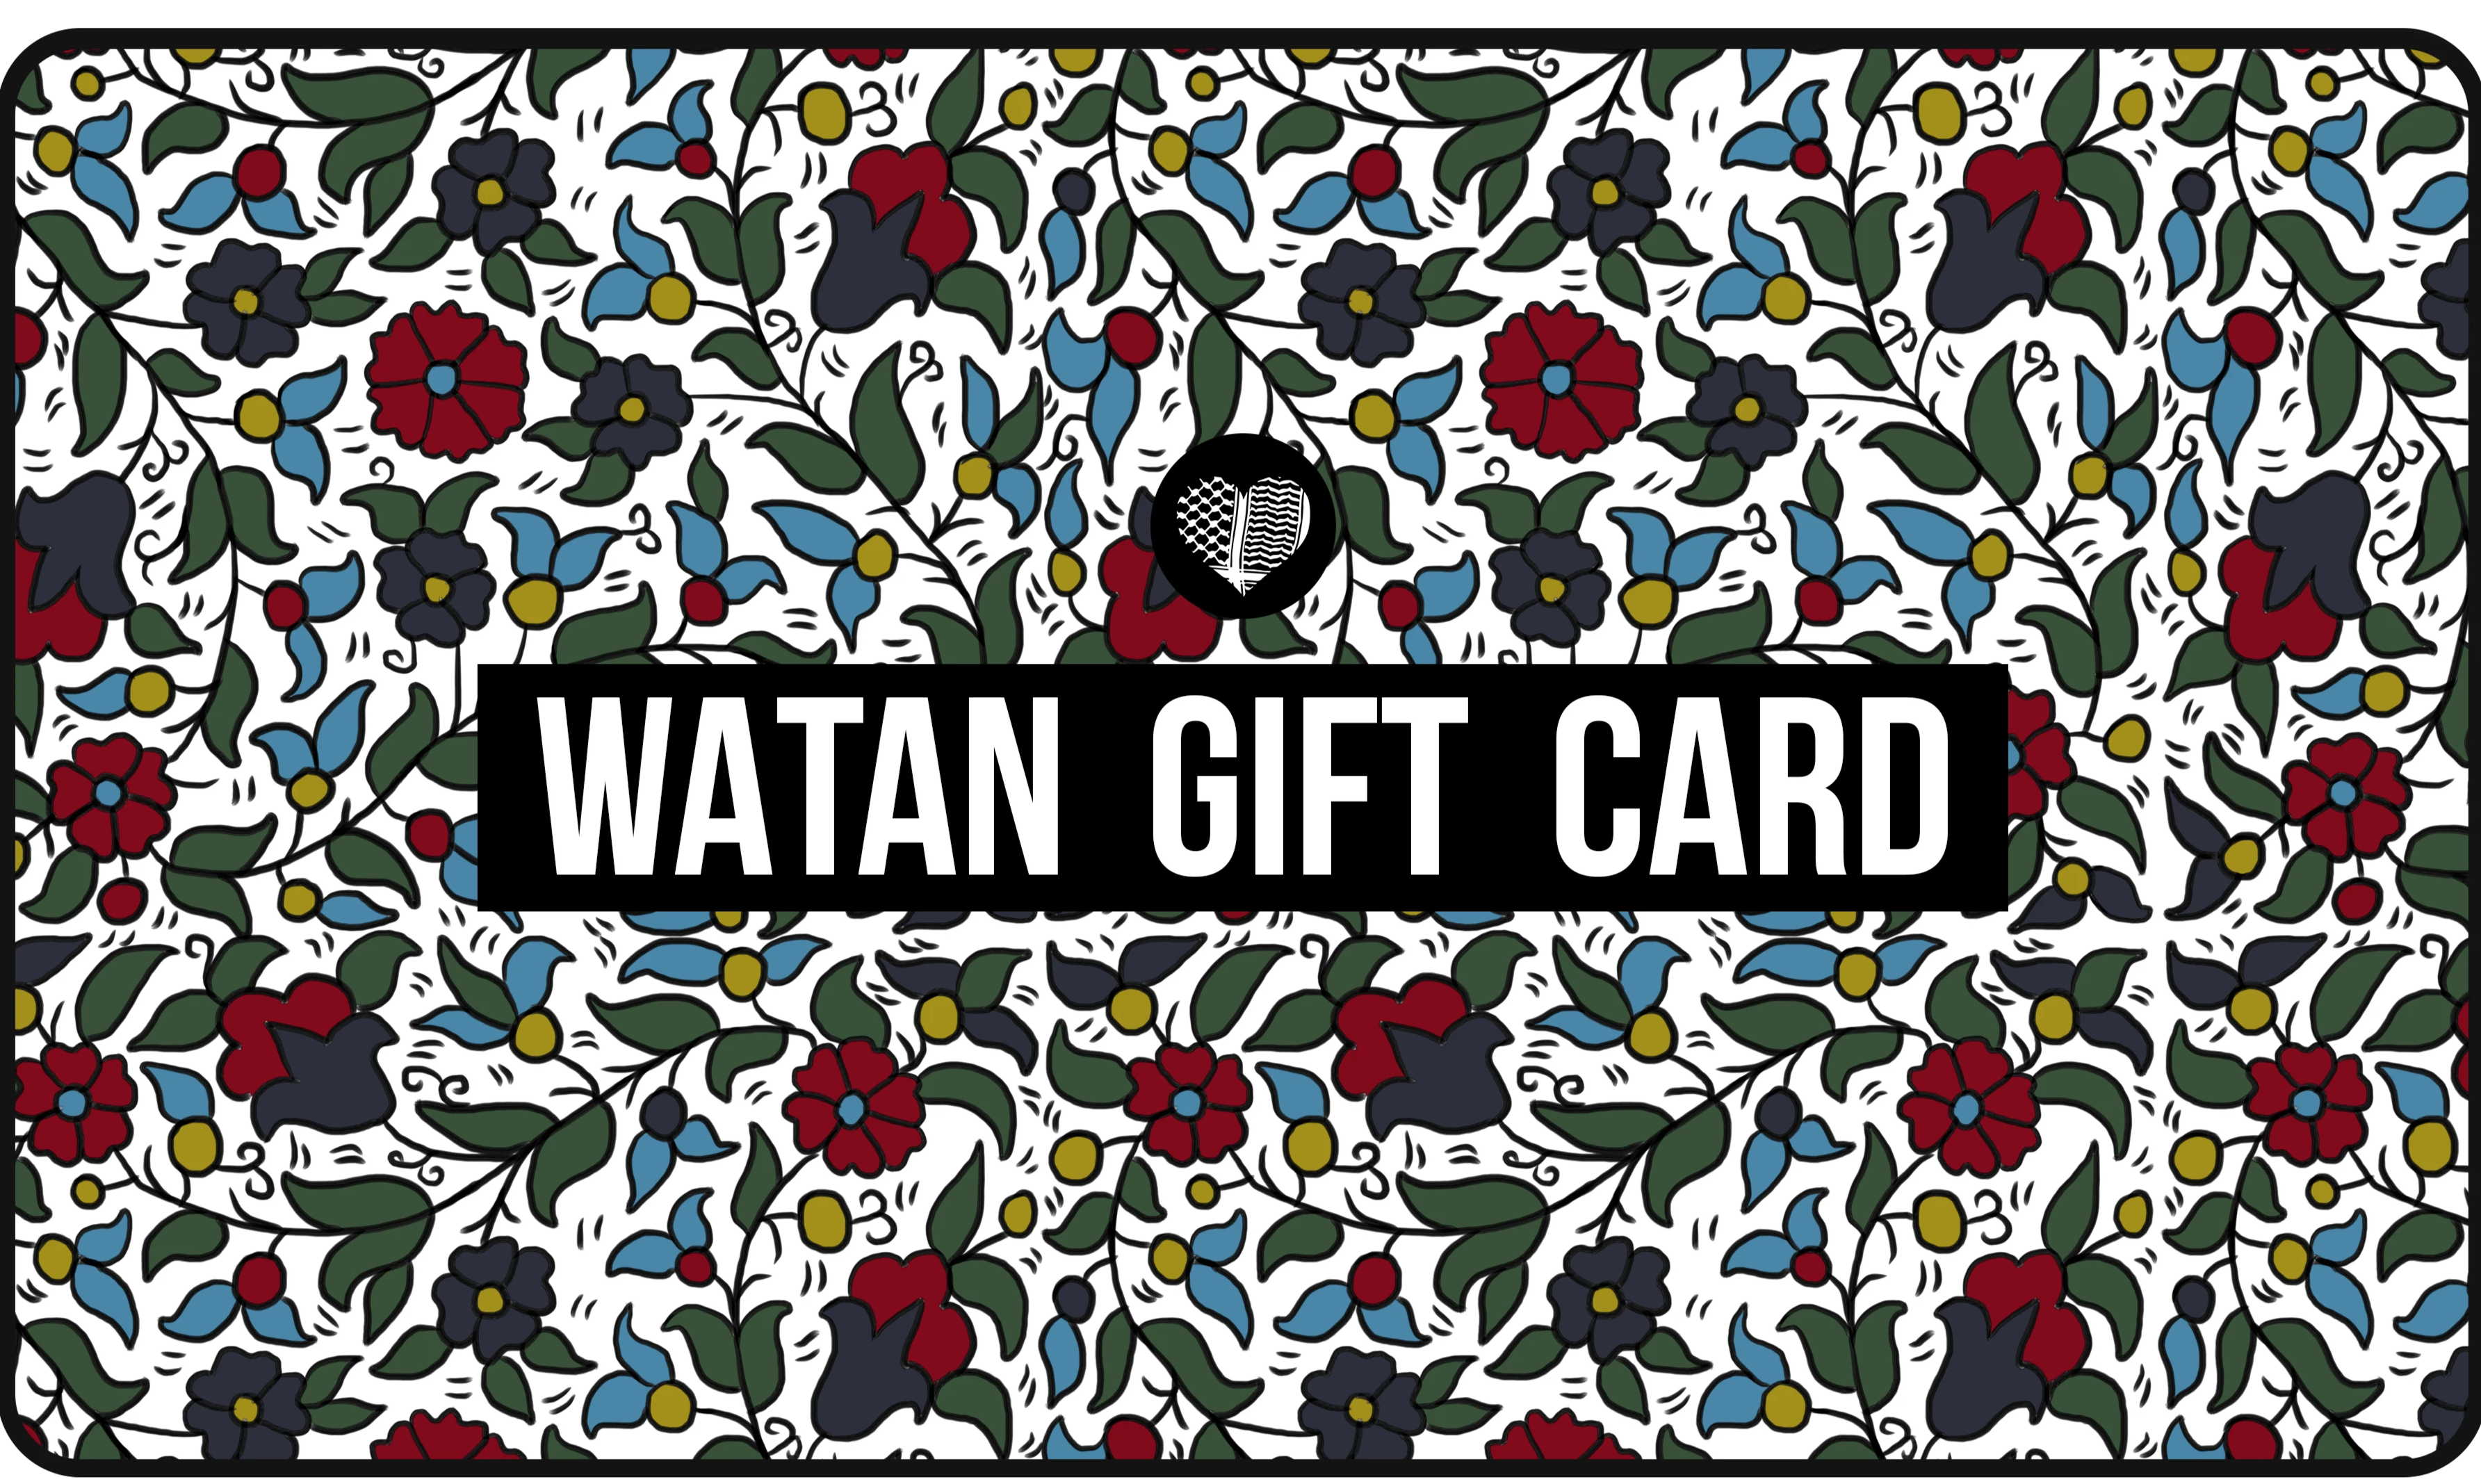 Wawa Gift Card $50.00